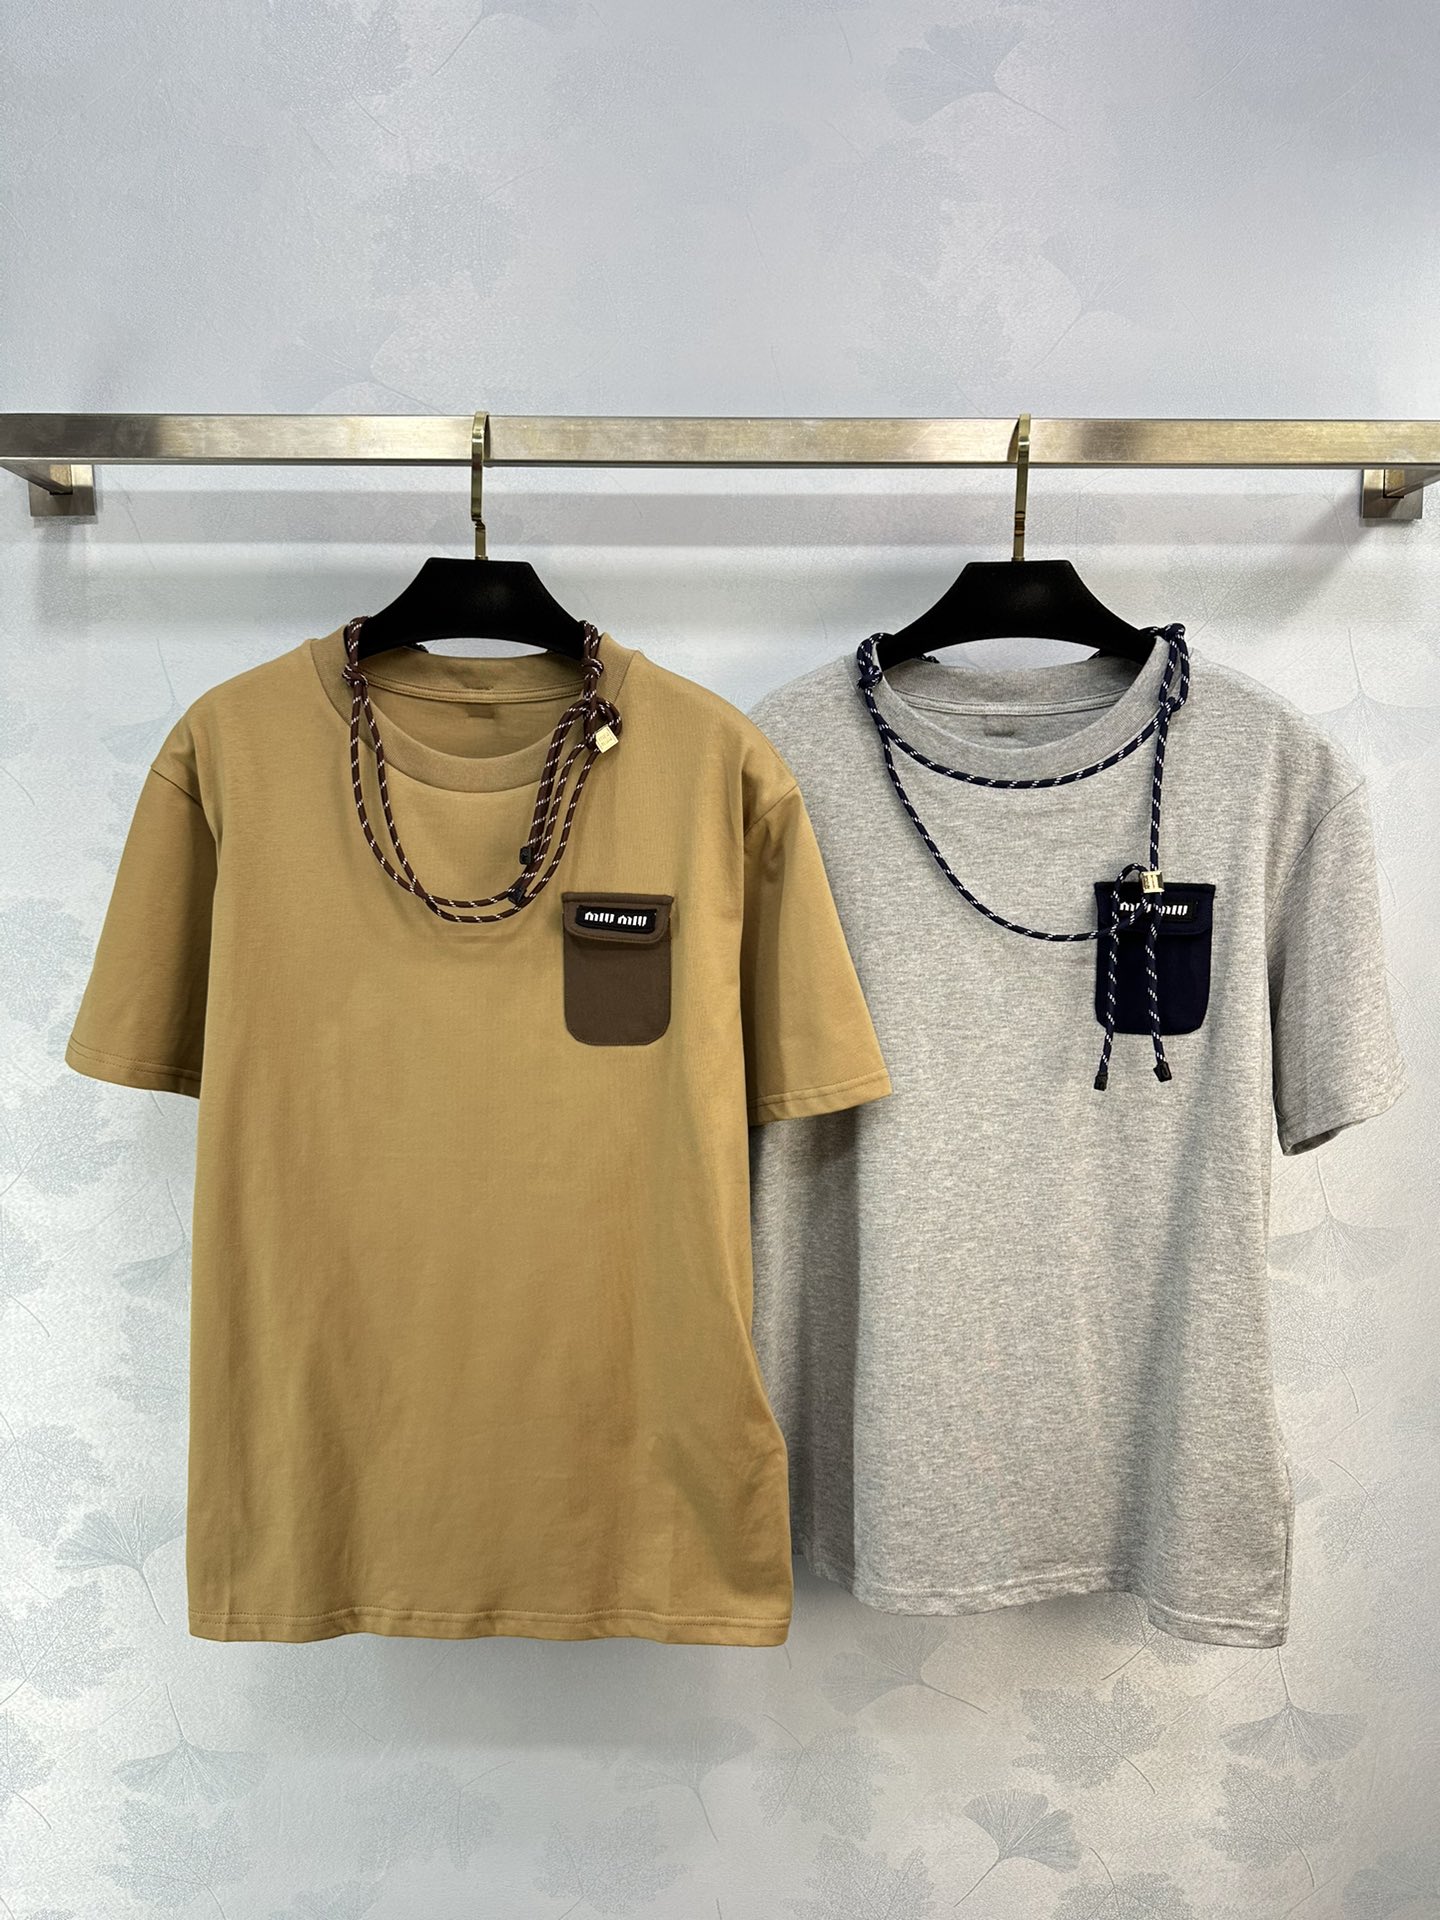 MiuMiu Clothing T-Shirt Cotton Summer Collection